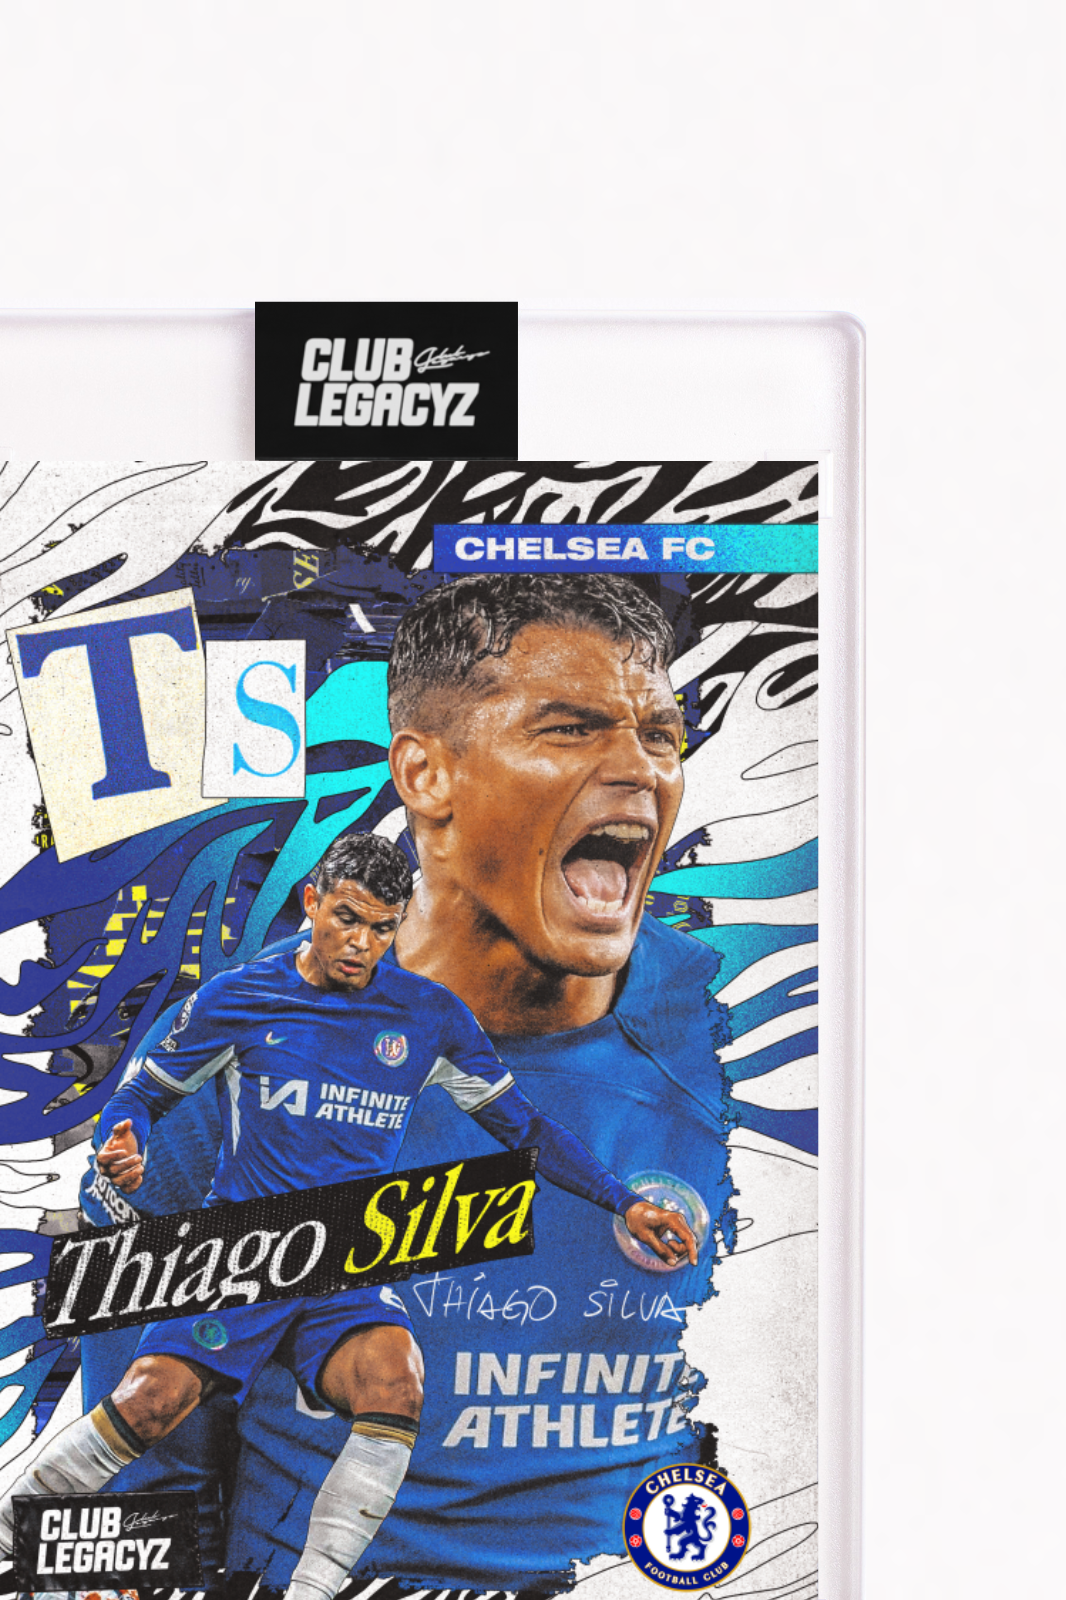 Chelsea FC - Thiago Silva Icon limited to 999